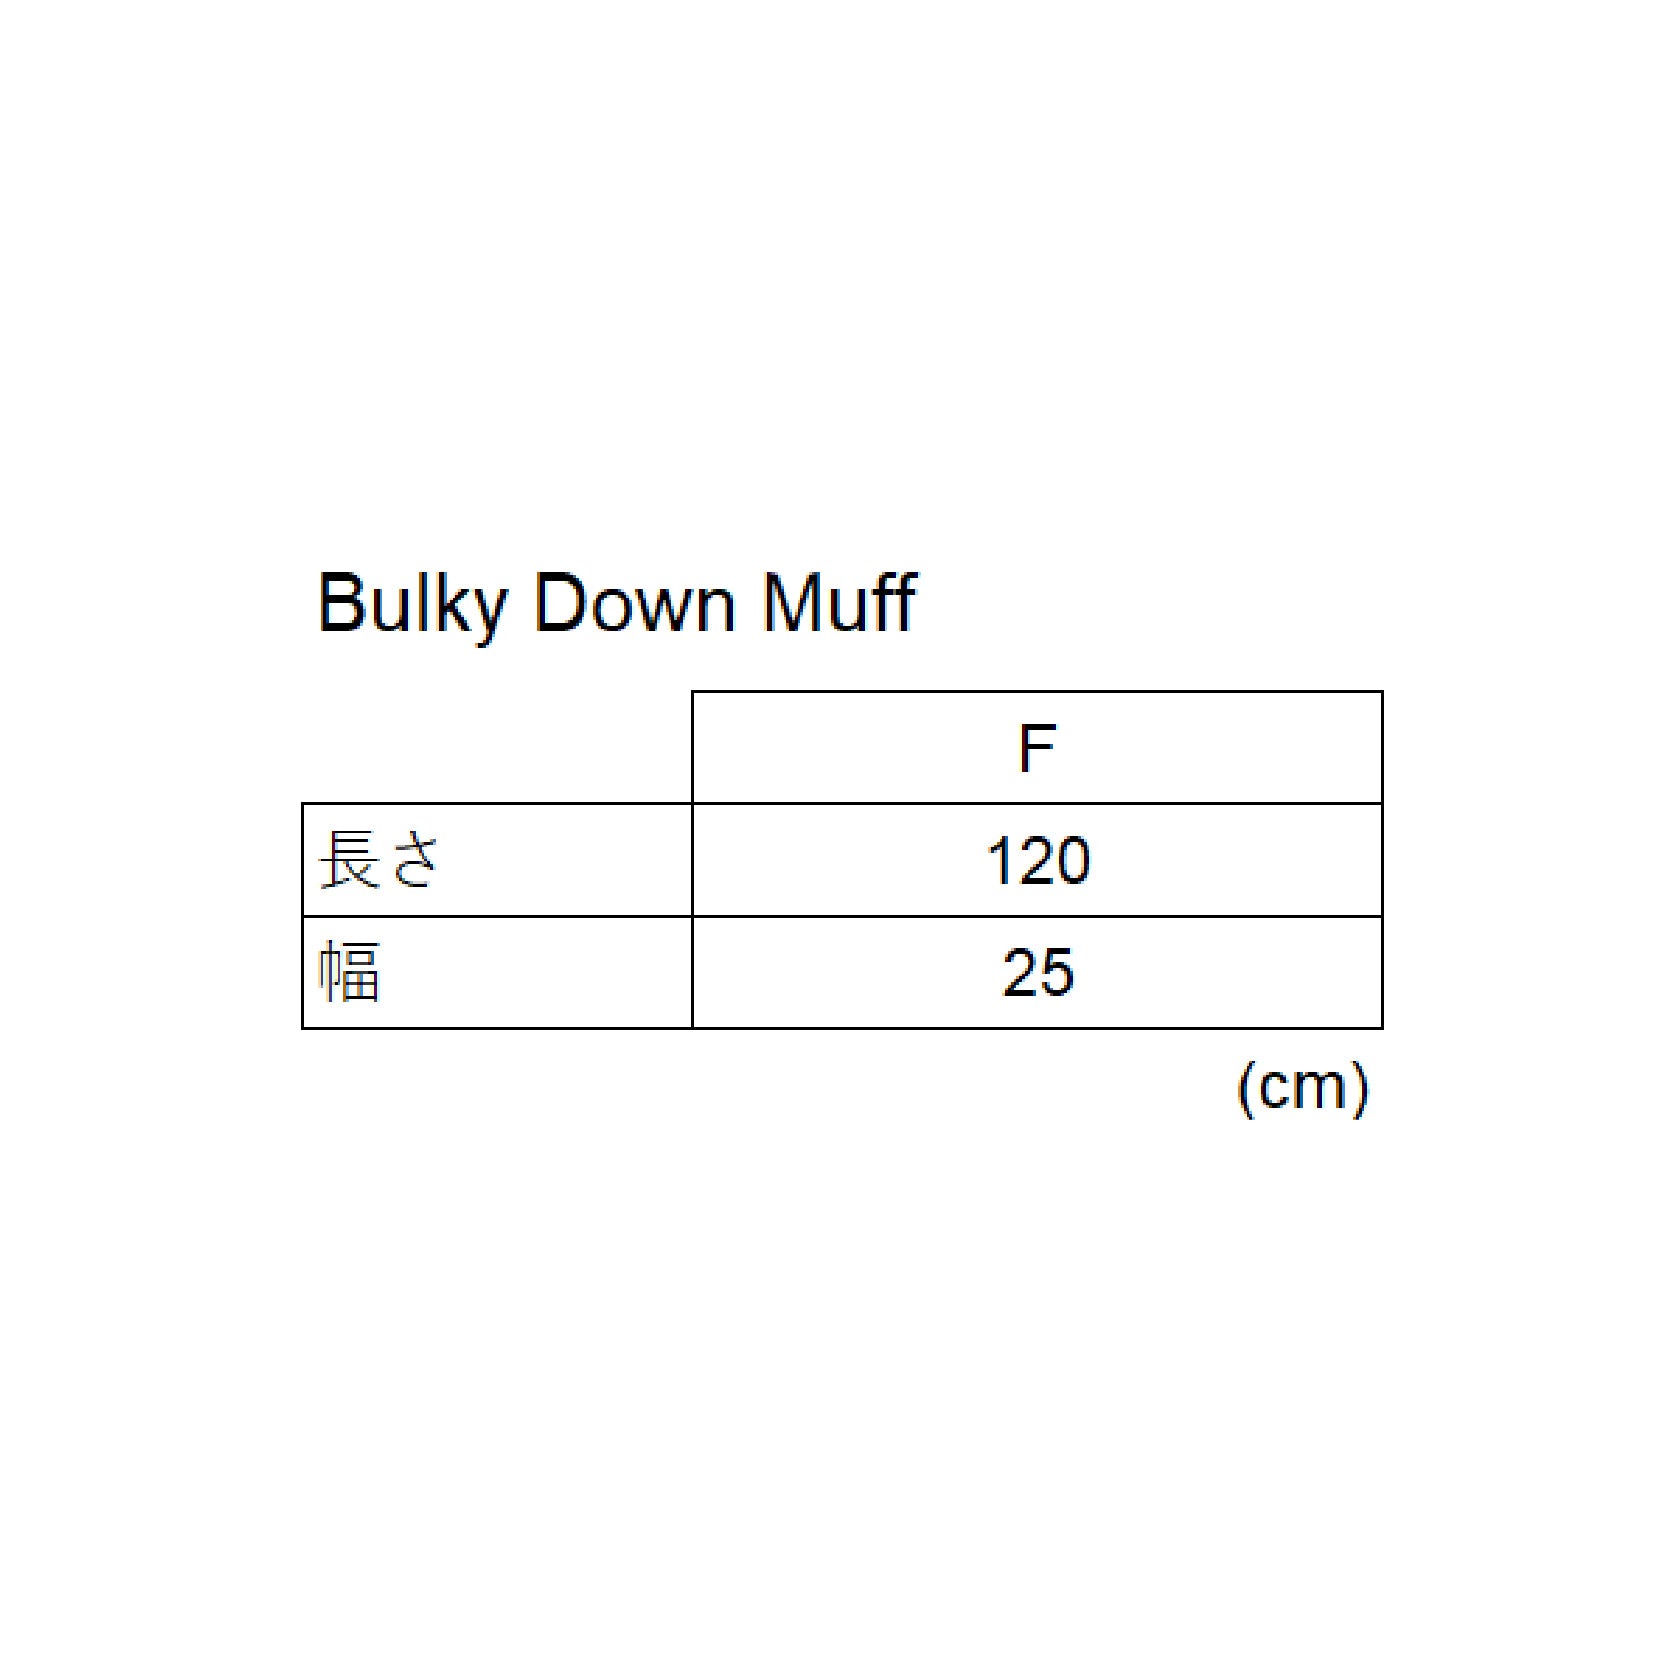 Bulky Down Muff